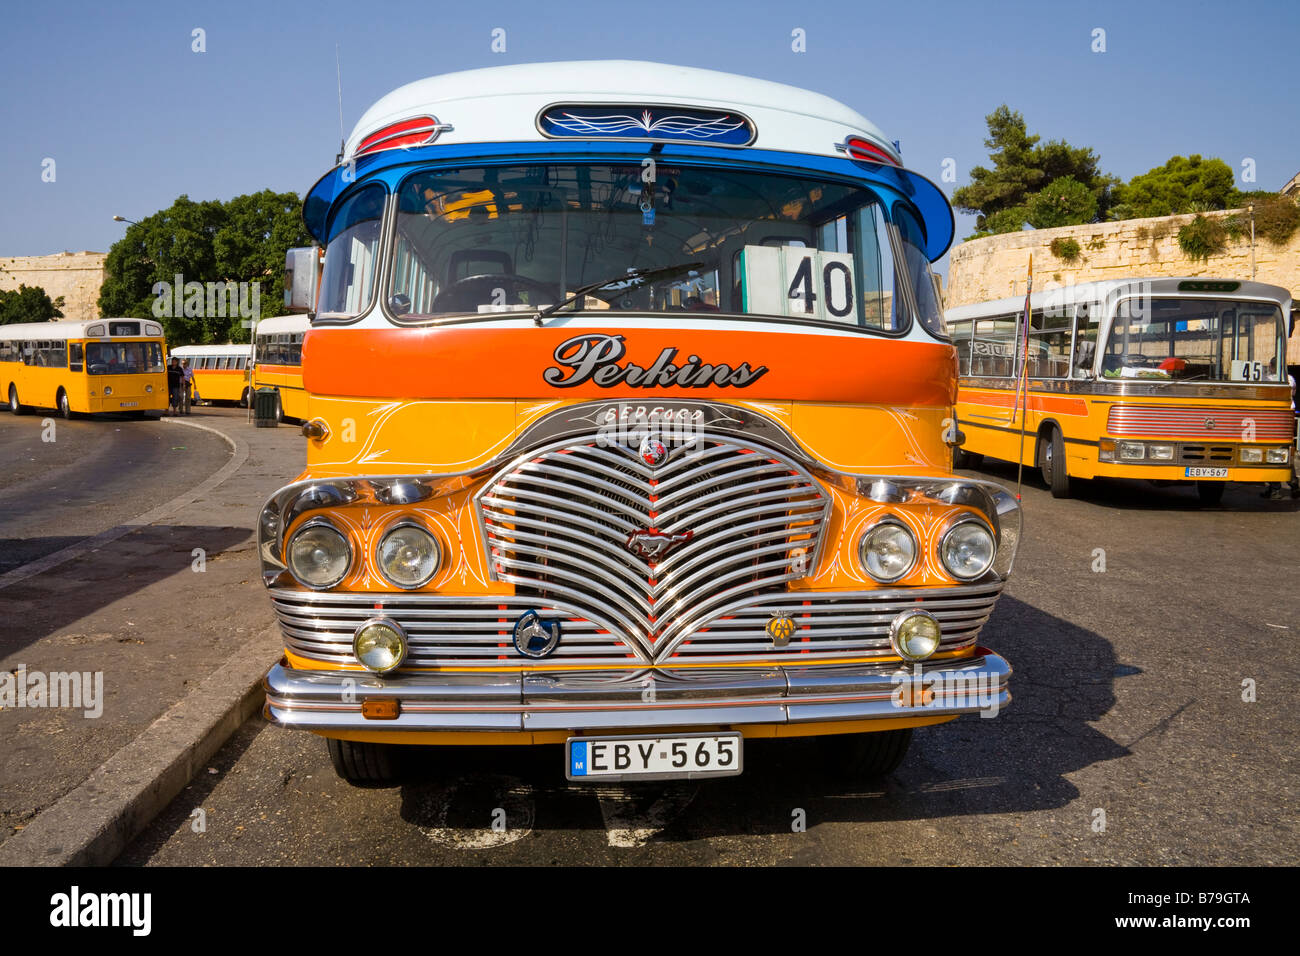 Public transport bus, parked at the bus terminus, Valletta, Malta Stock Photo